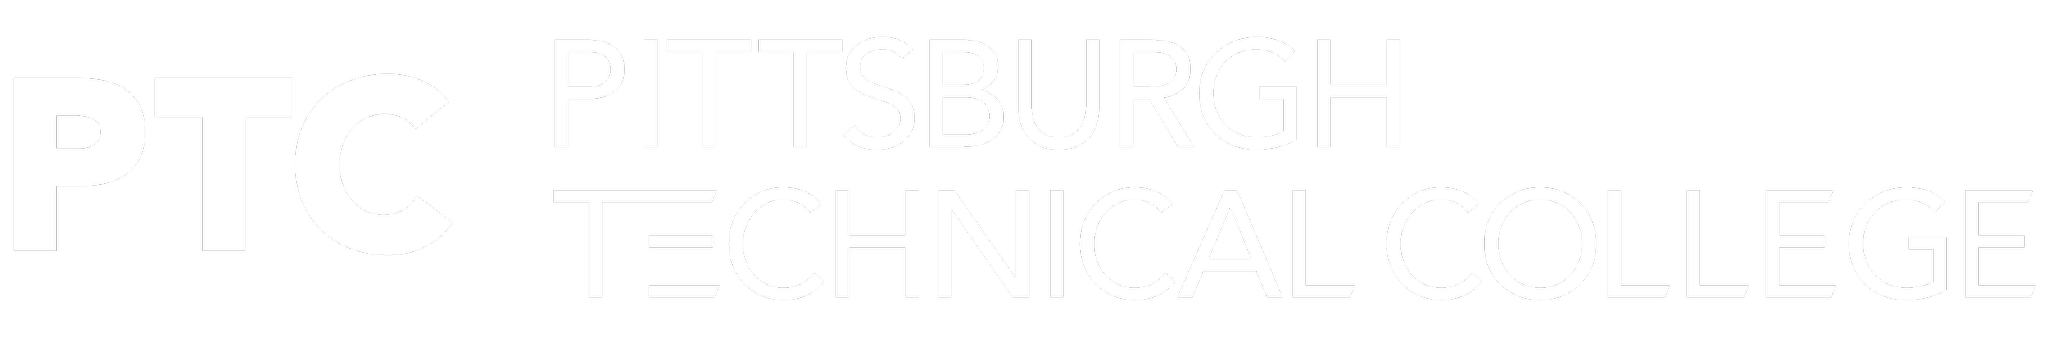 PTC Pittsburgh Technical College logo